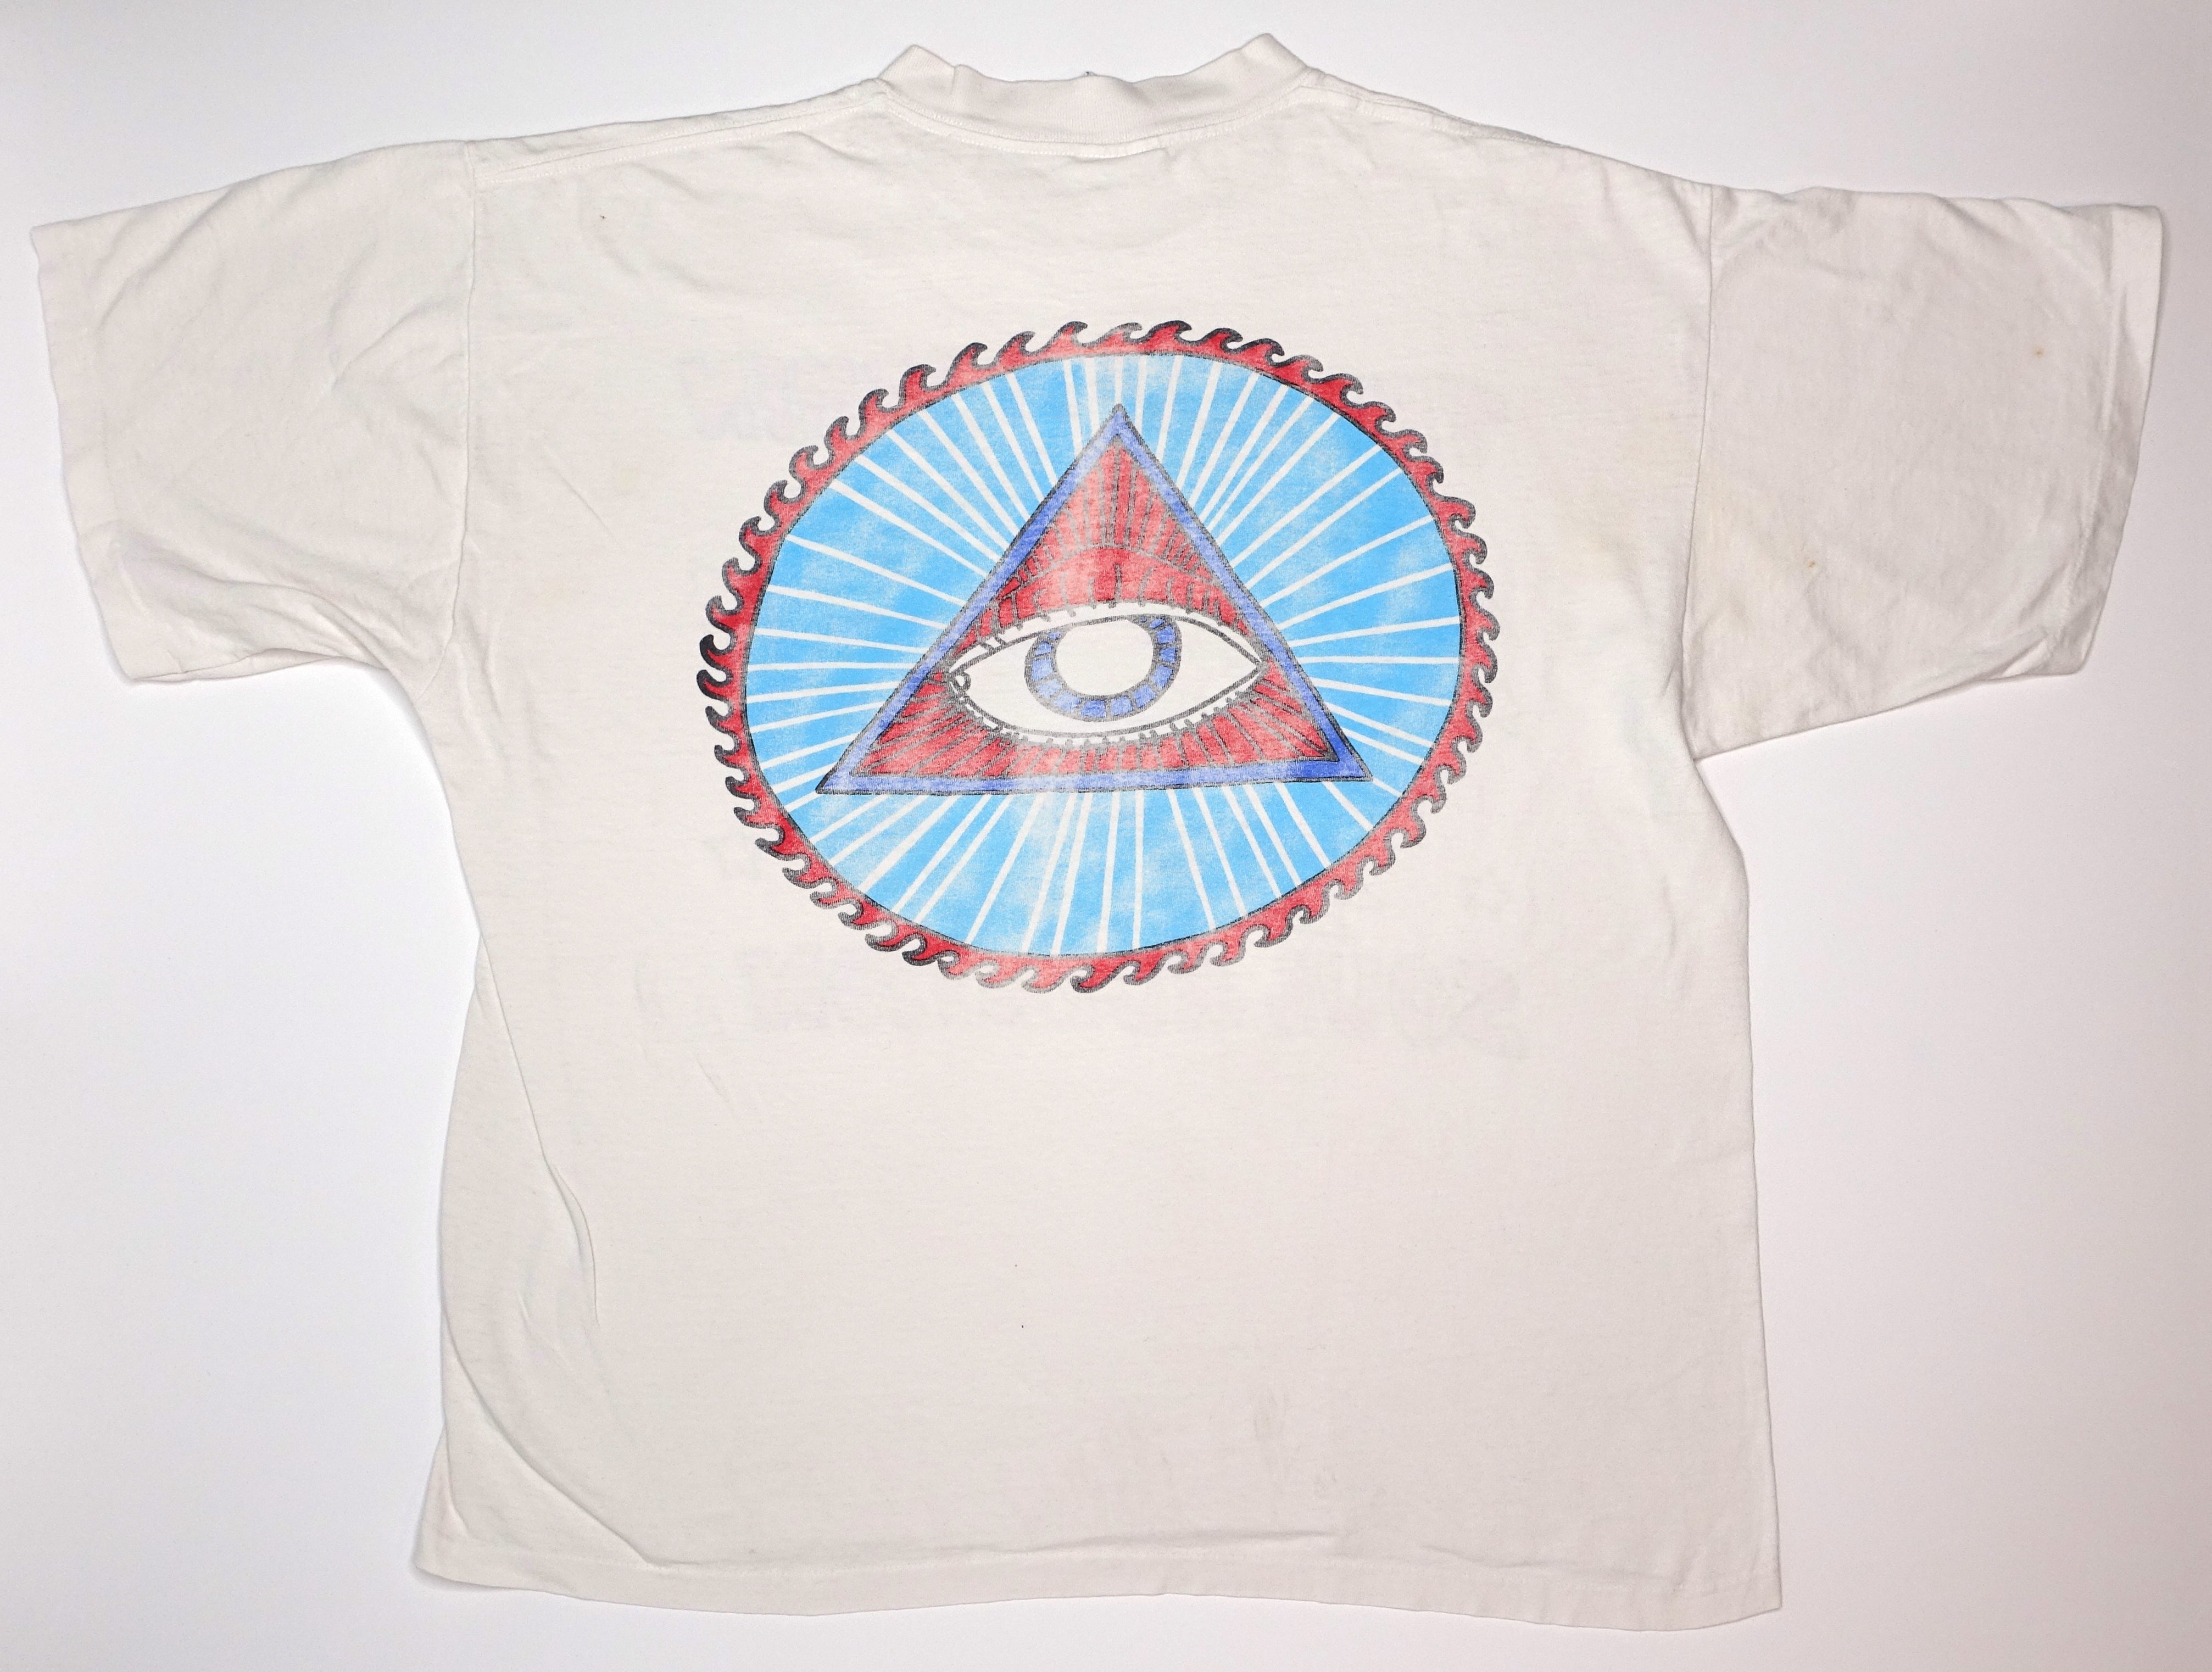 Dead Milkmen - Soul Rotation Pyramid 1992 Tour Shirt Size XL